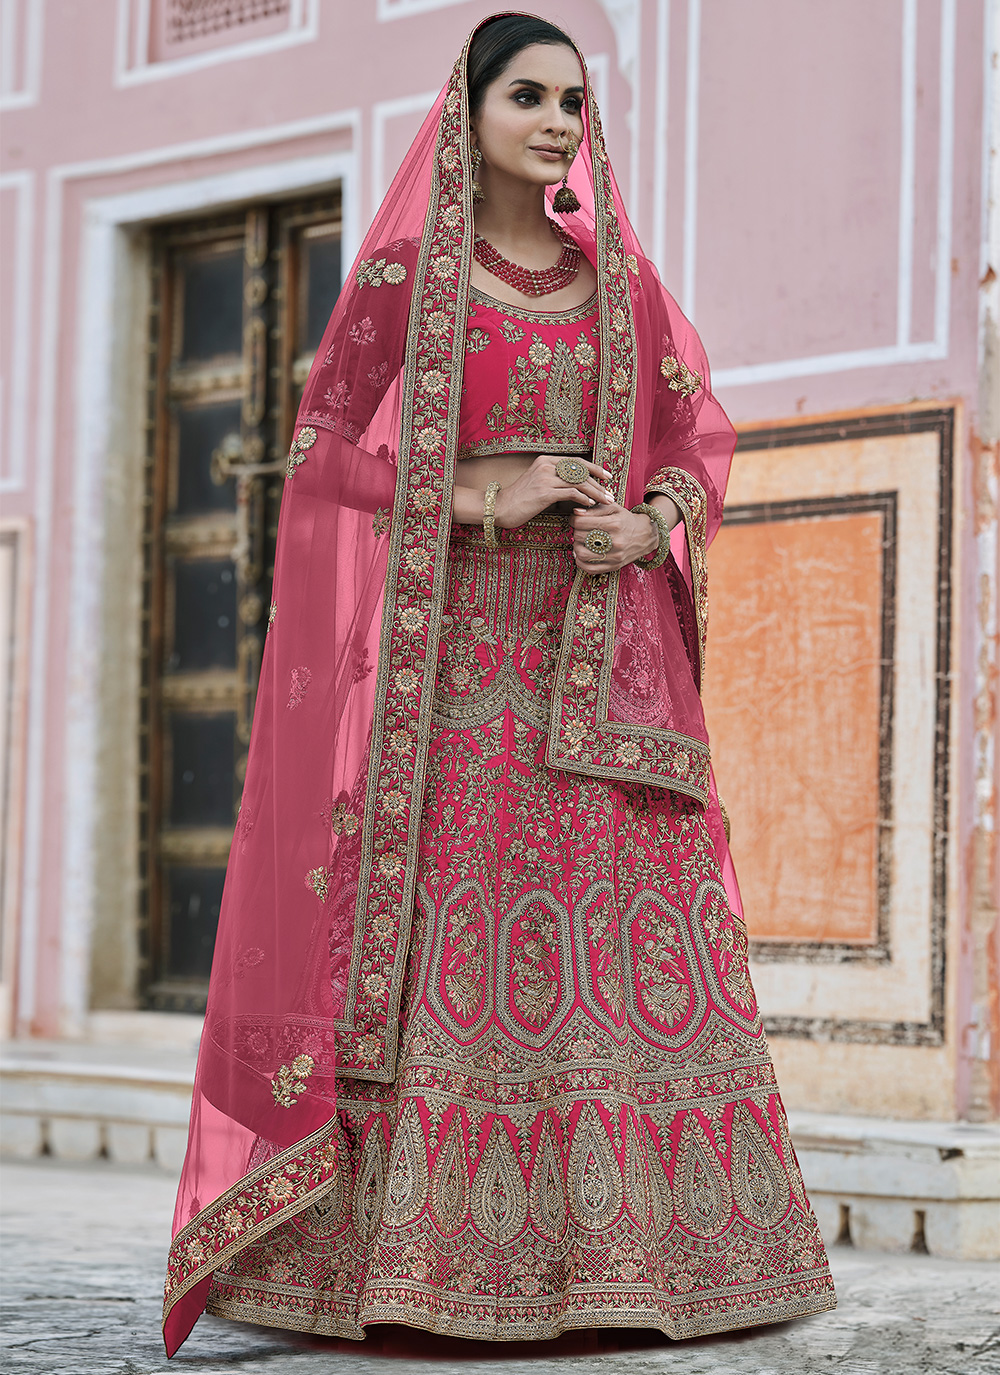 Dulhaniyaa.com - This bride wore beautiful maroon lehenga with stunning  pastel pink floral kaleere... . Floral kaleere-@pruneindia Follow  @dulhaniyaa for wedding ideas Use #dulhaniyaa for alerts #bride  #indianbride #wedding #indianwedding ...